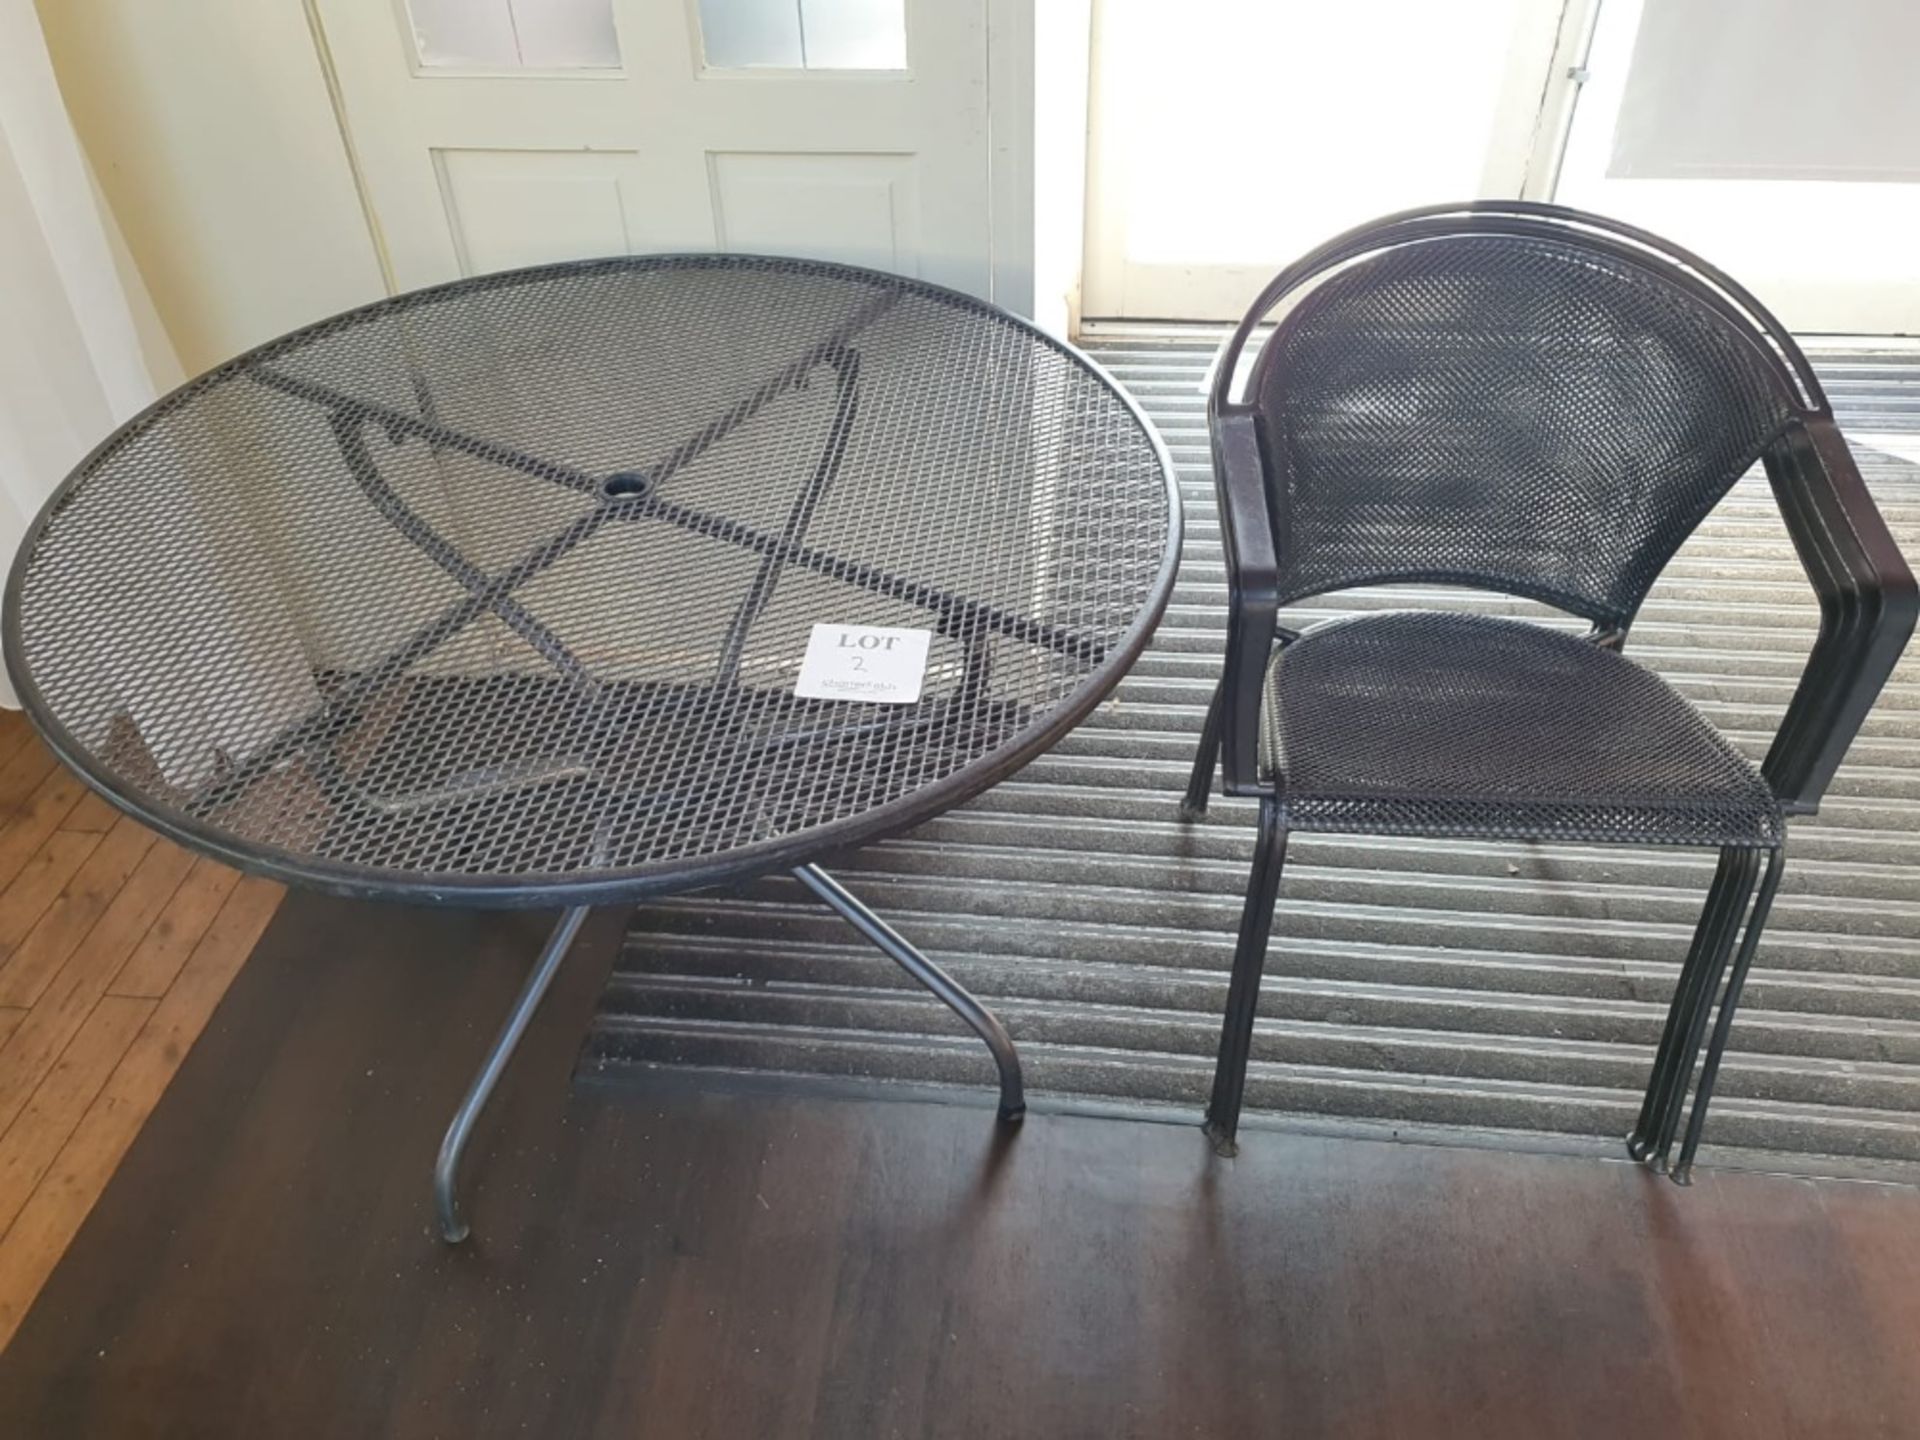 Metal circular table 1,050mm diameter with 4 metal chairs